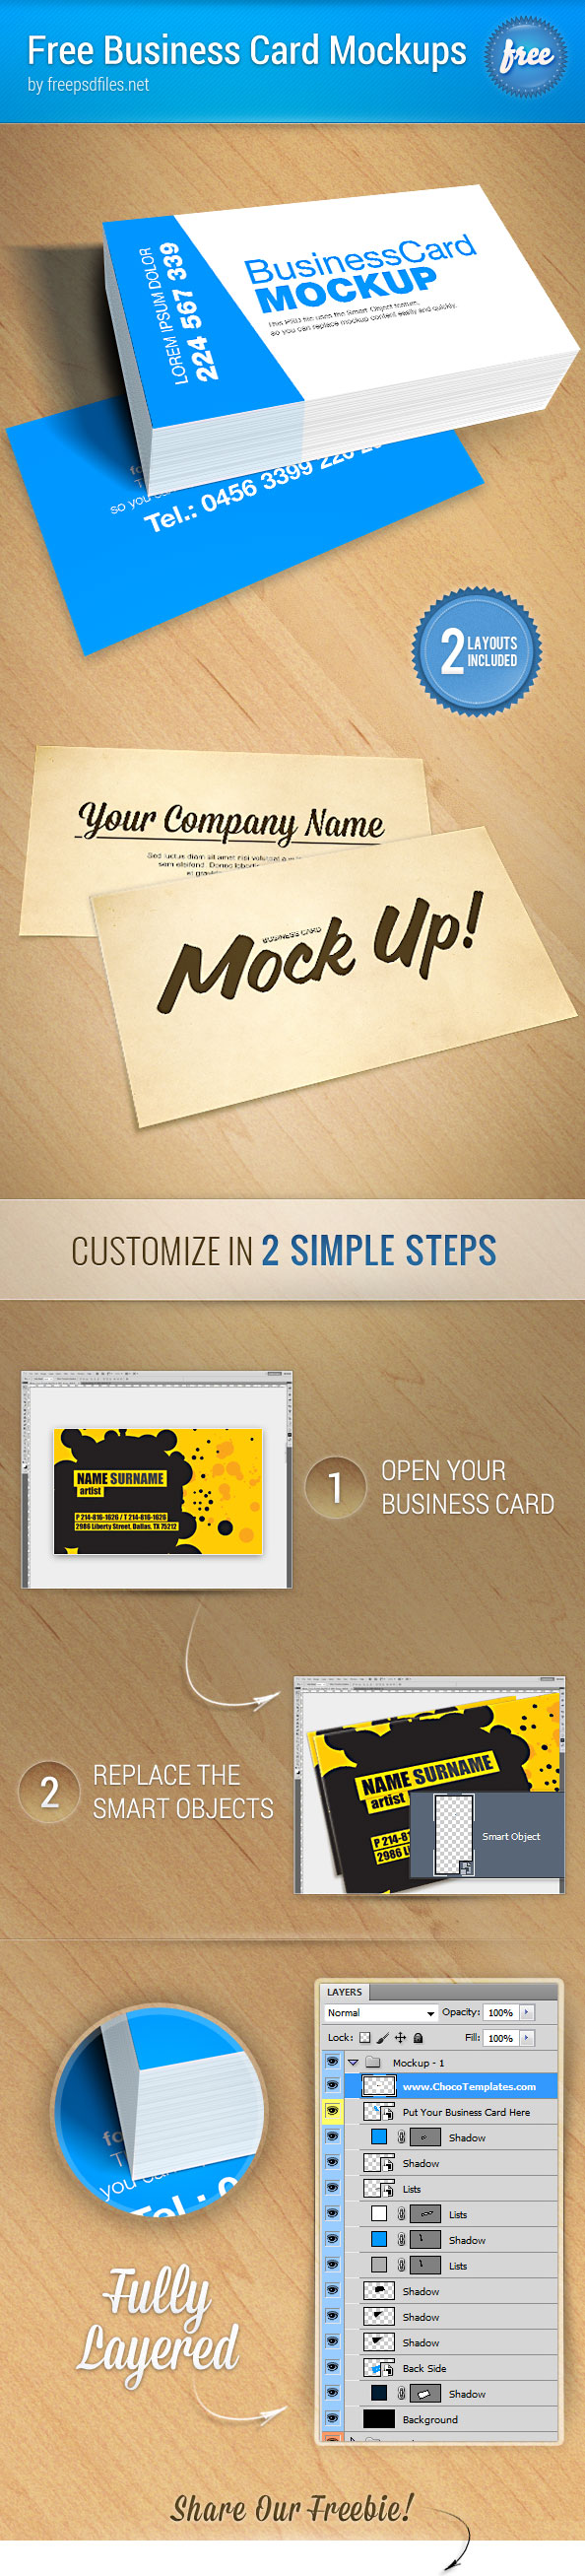 Business Card Mockup PSD